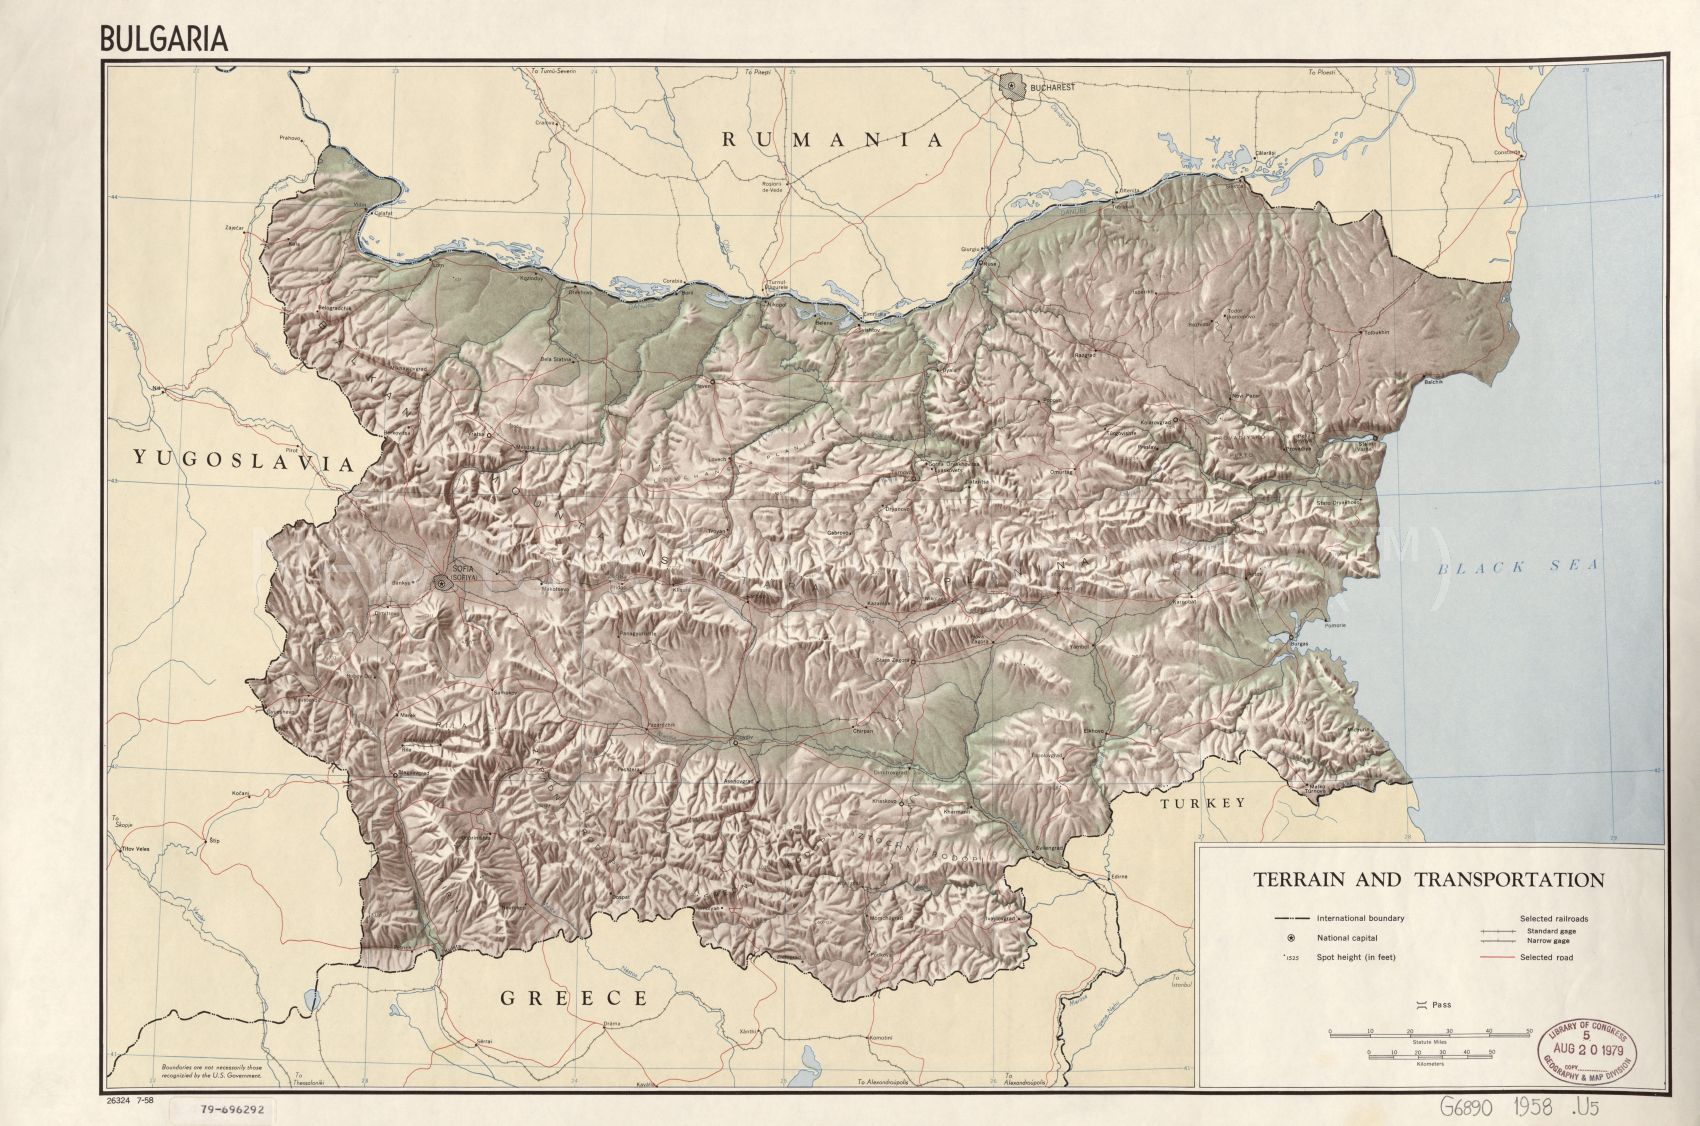 1958 map Bulgaria, terrain and transportation. Map Subjects: Bulgaria